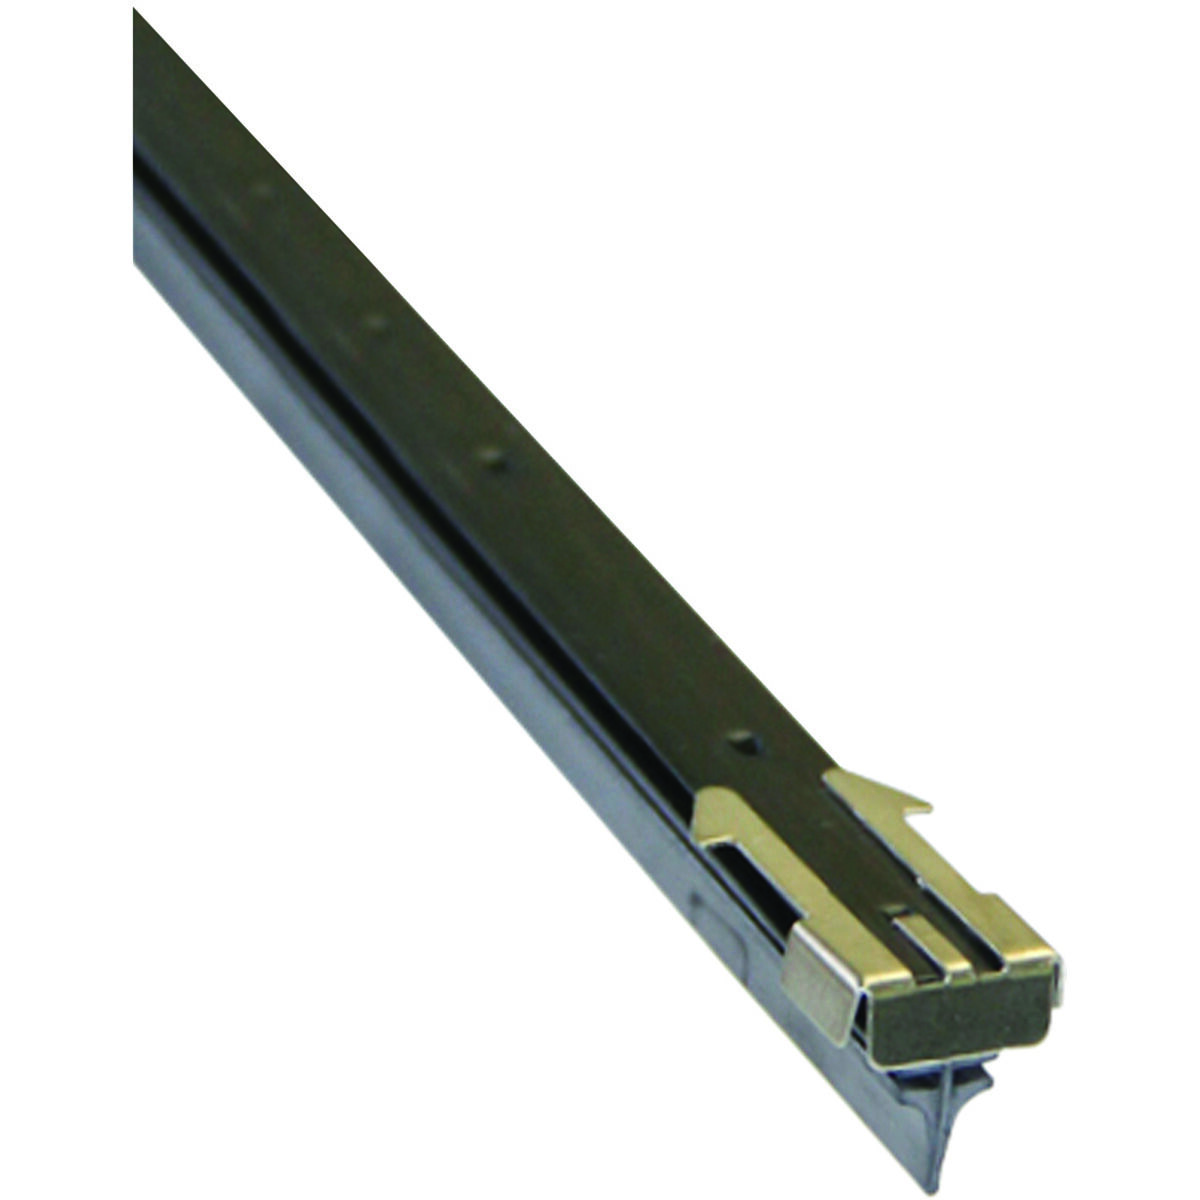 SCA Wiper Refill Single Edge - Wide Back 8.5mm, Pair, , scaau_hi-res